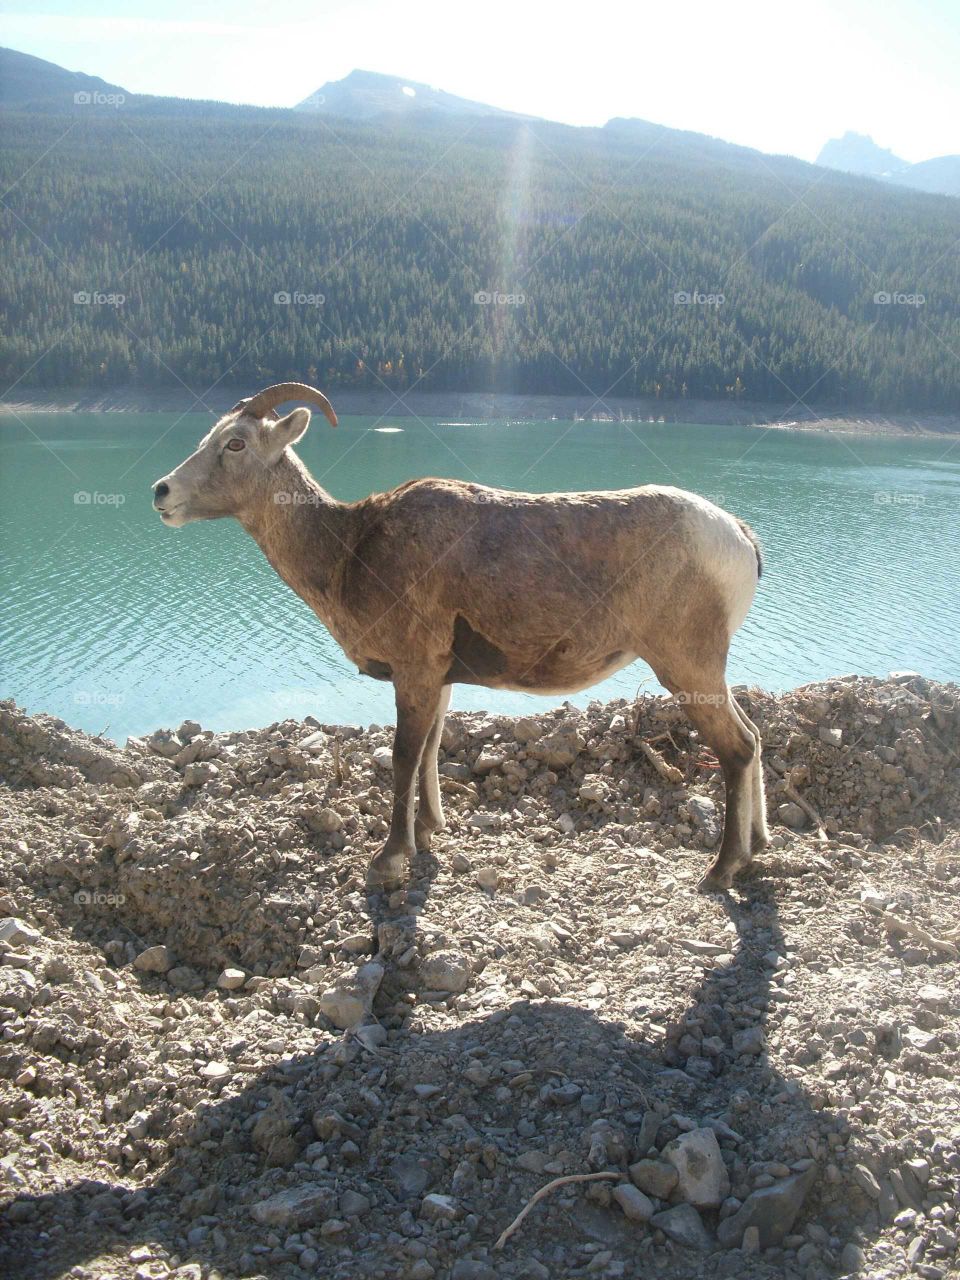 Mountain Goat at Jasper National Park